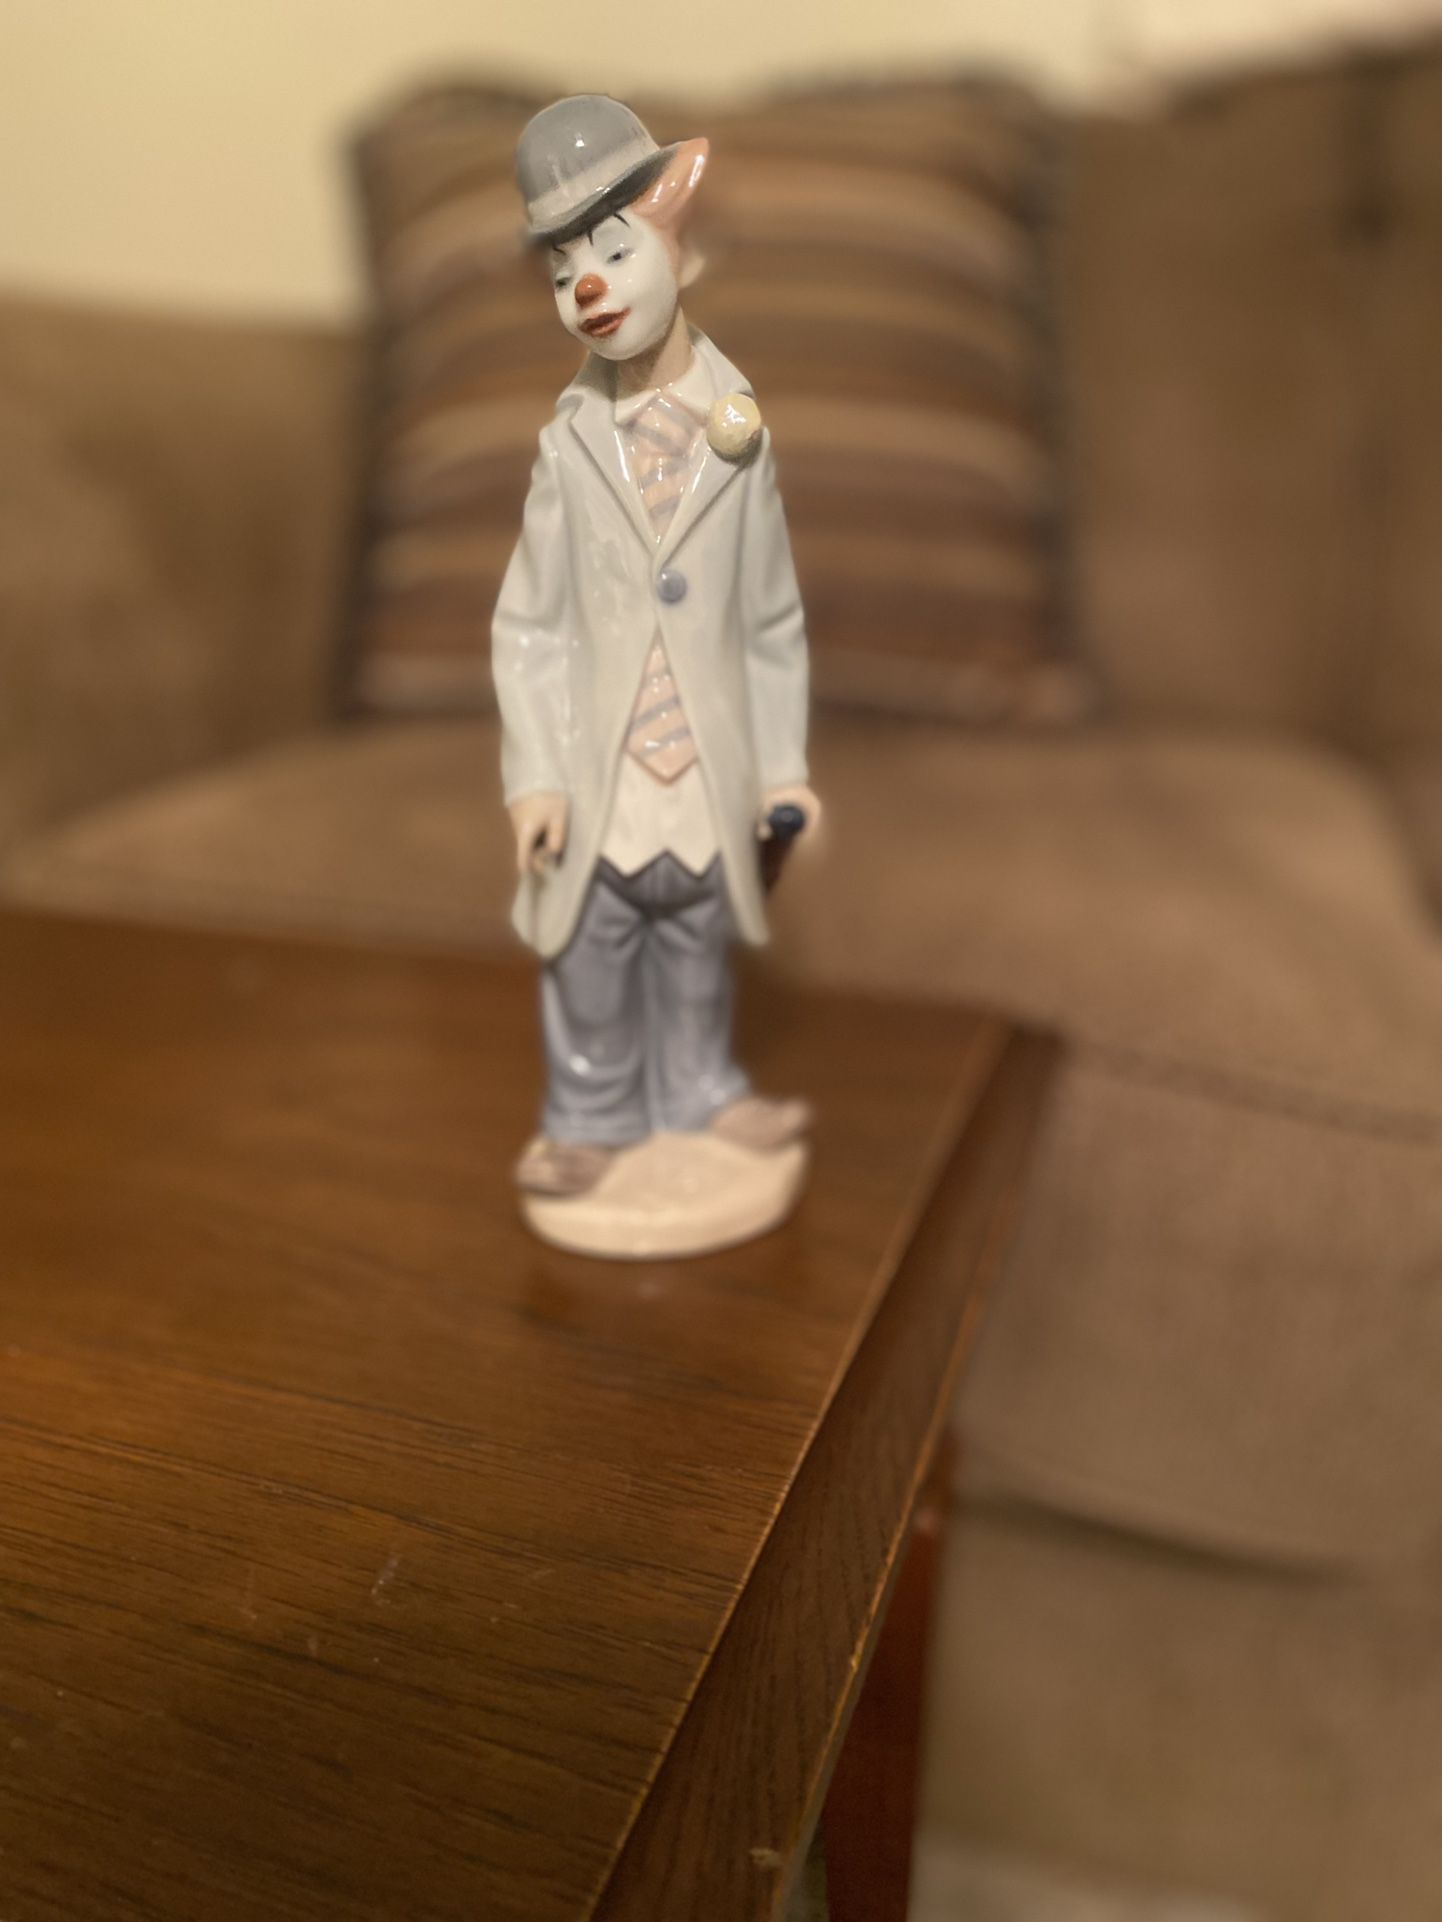 Lladro Clown Sam Figurine 5472